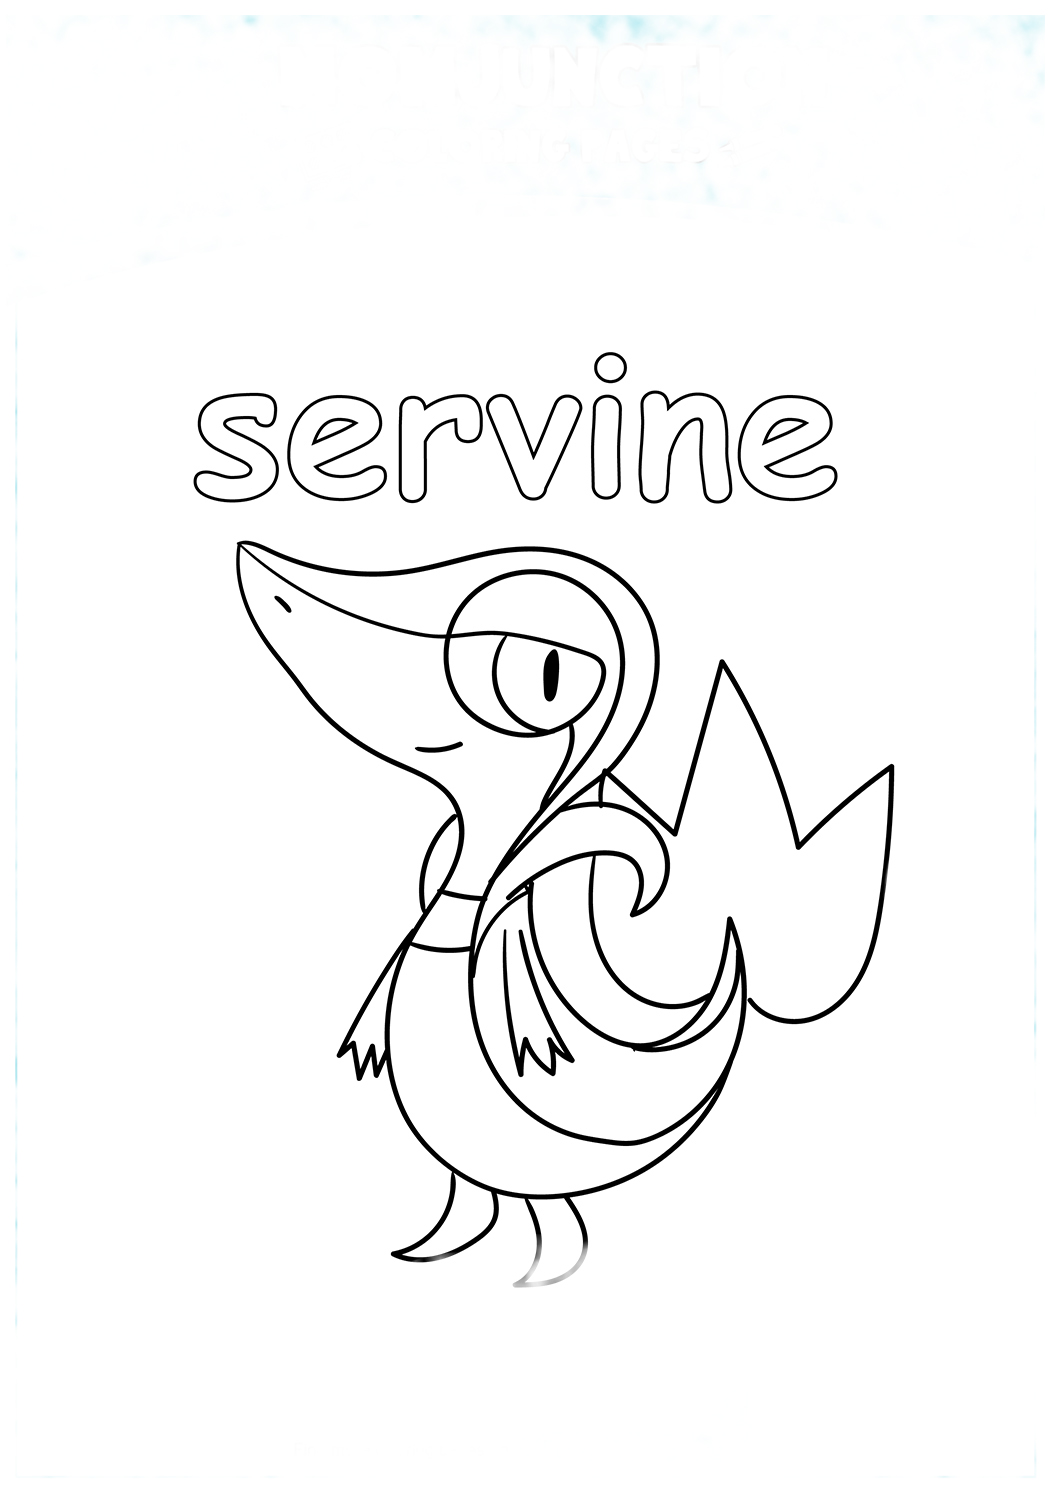 Servine Pokemon Coloring Page